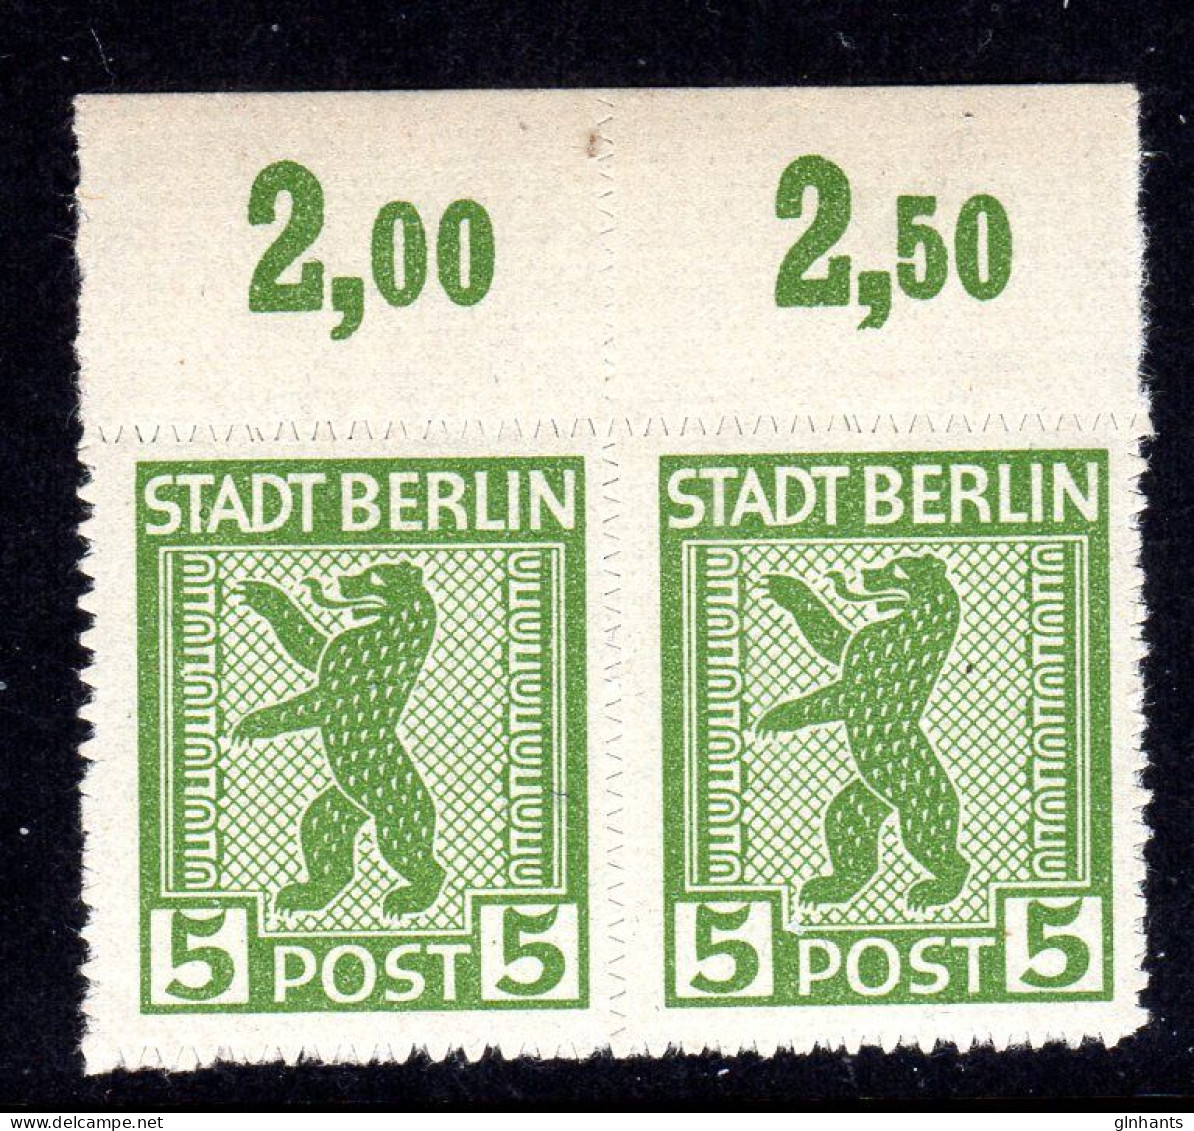 GERMANY BERLIN-BRANDENBURG - 1945 5PF BEAR STAMP IN PAIR ZIGZAG ROULETTE FINE MNH ** - Berlin & Brandenburg